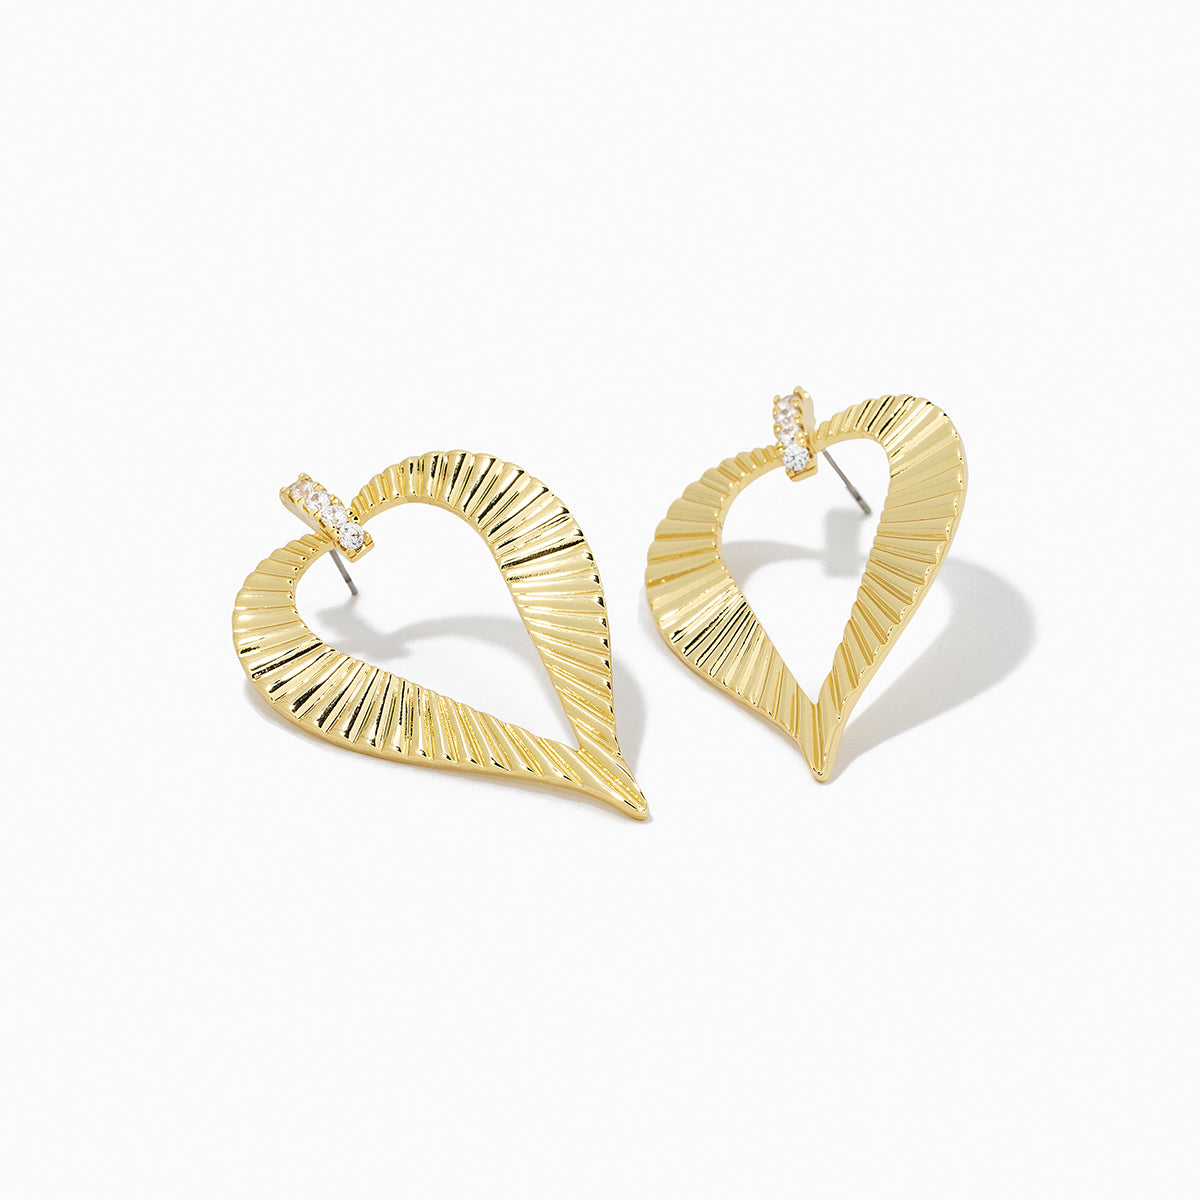 Honeymoon Earrings | Gold | Product Detail Image | Uncommon James